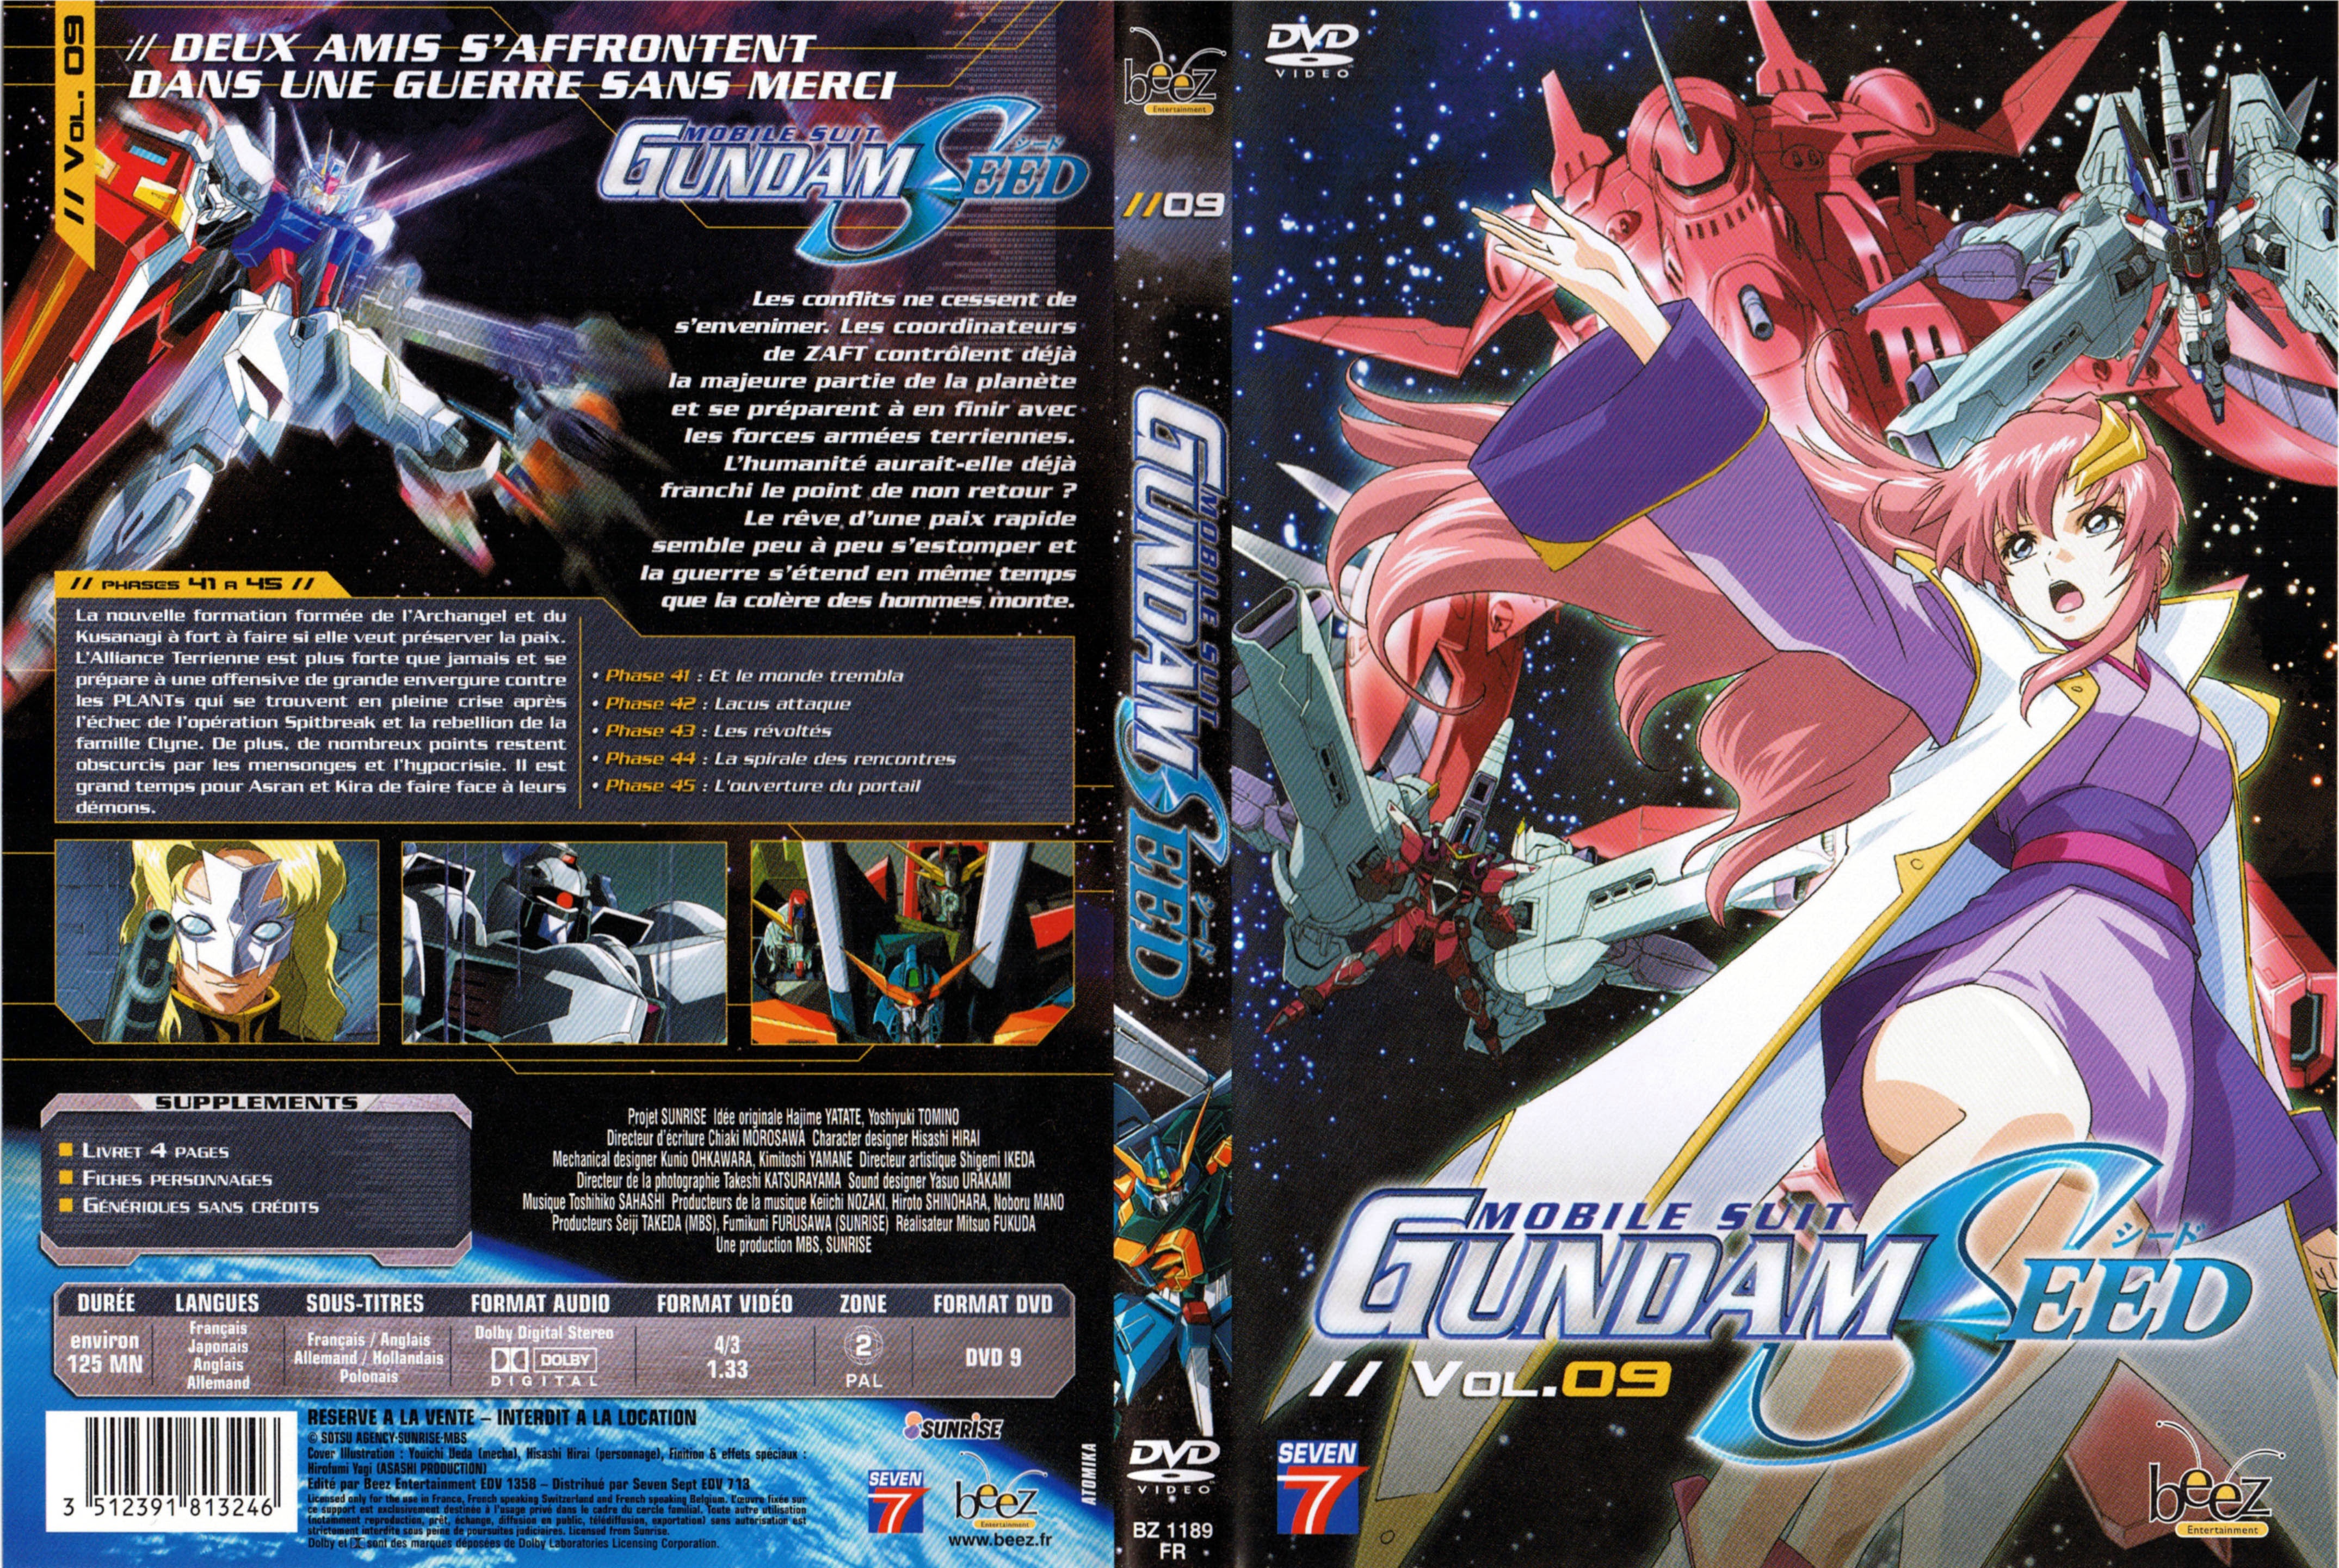 Jaquette DVD Gundam seed vol 09